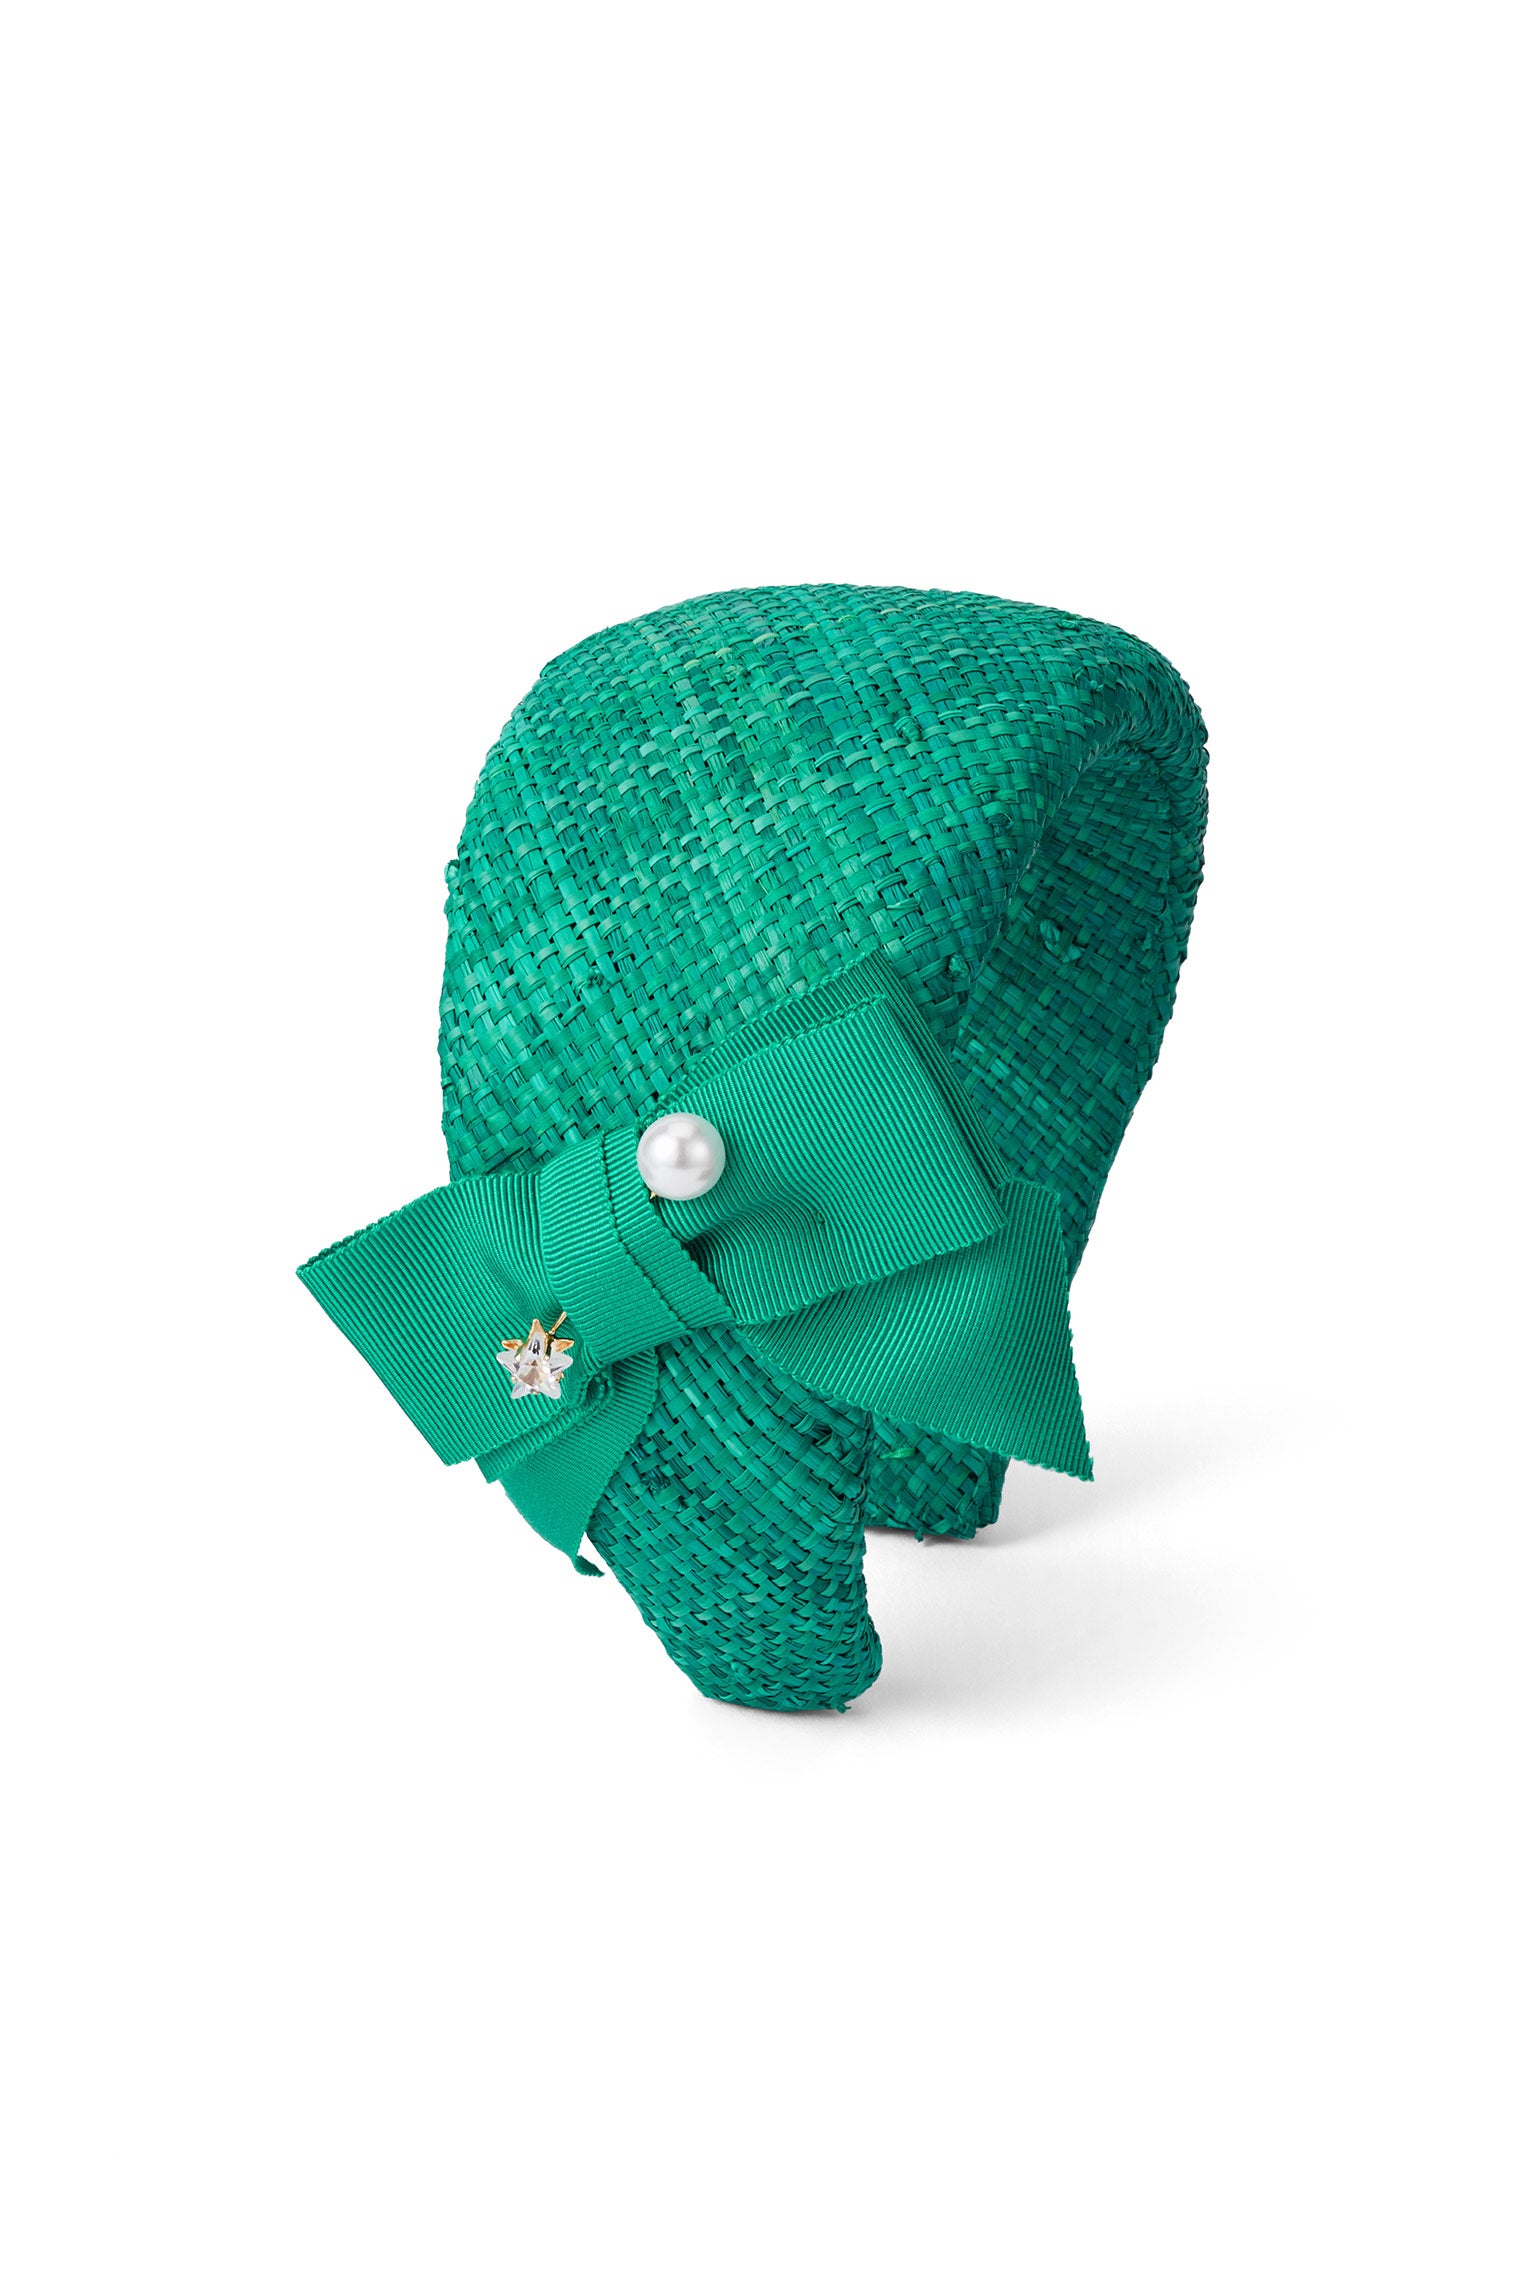 Tanami Headband - Henley Royal Regatta Hats - Lock & Co. Hatters London UK